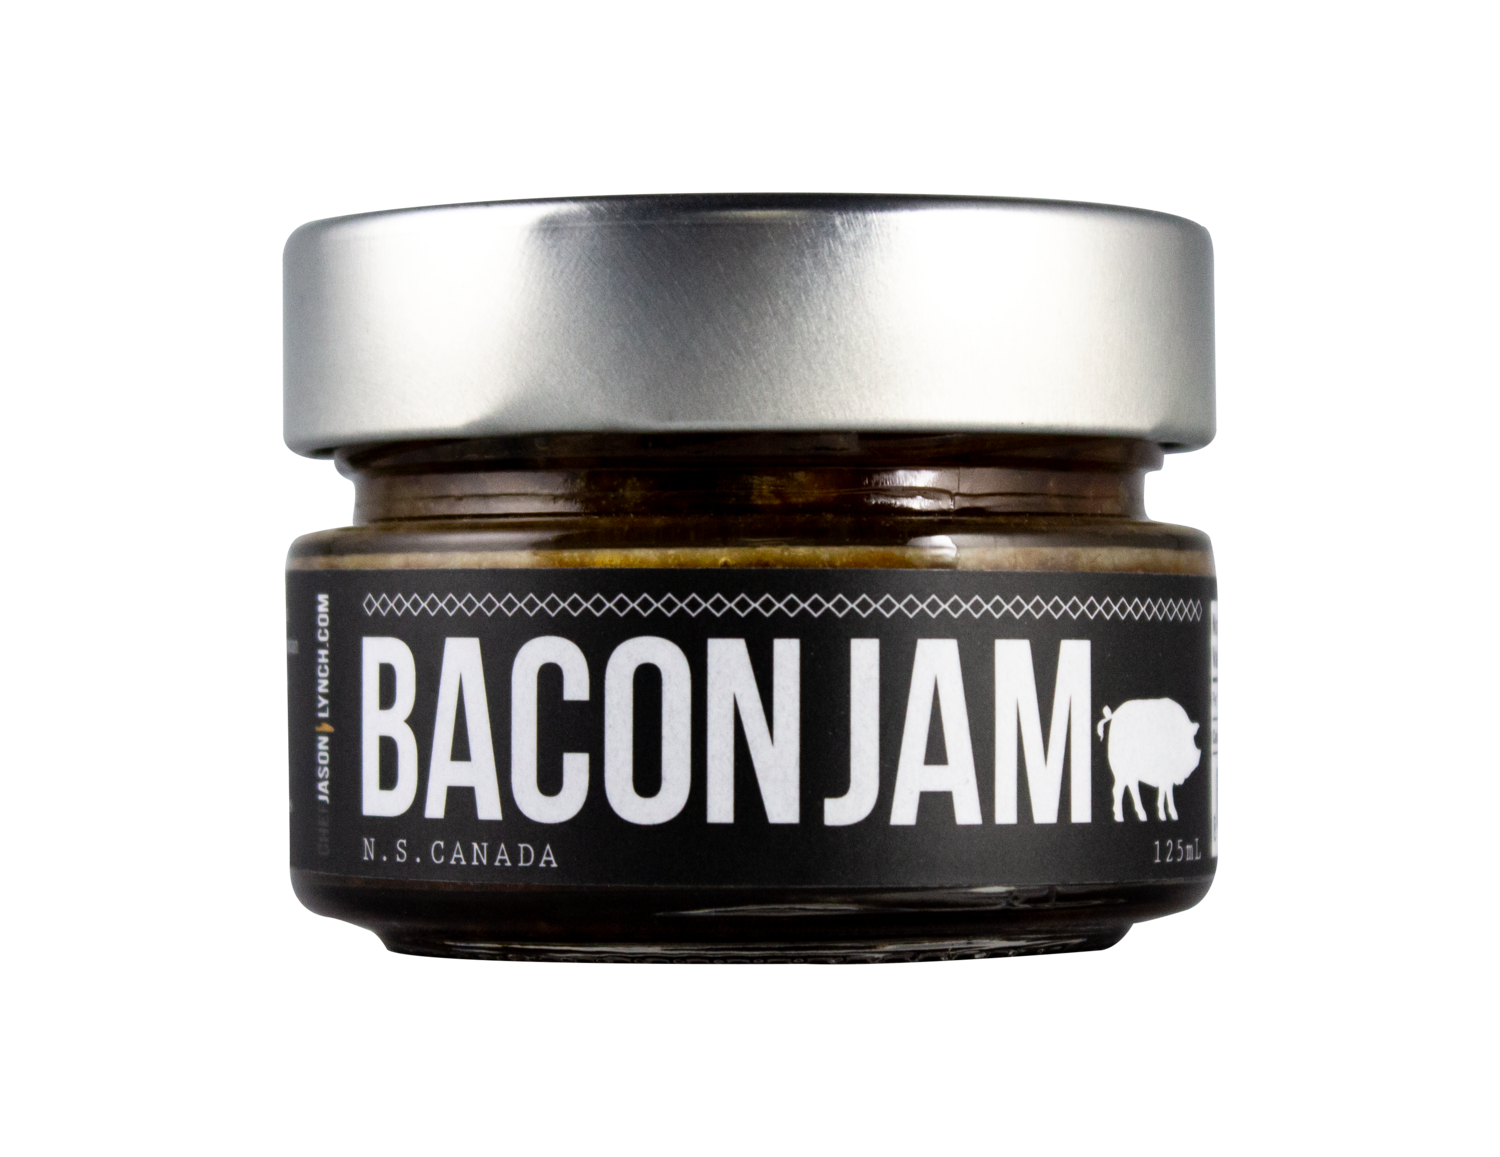 Jason's Bacon Jam